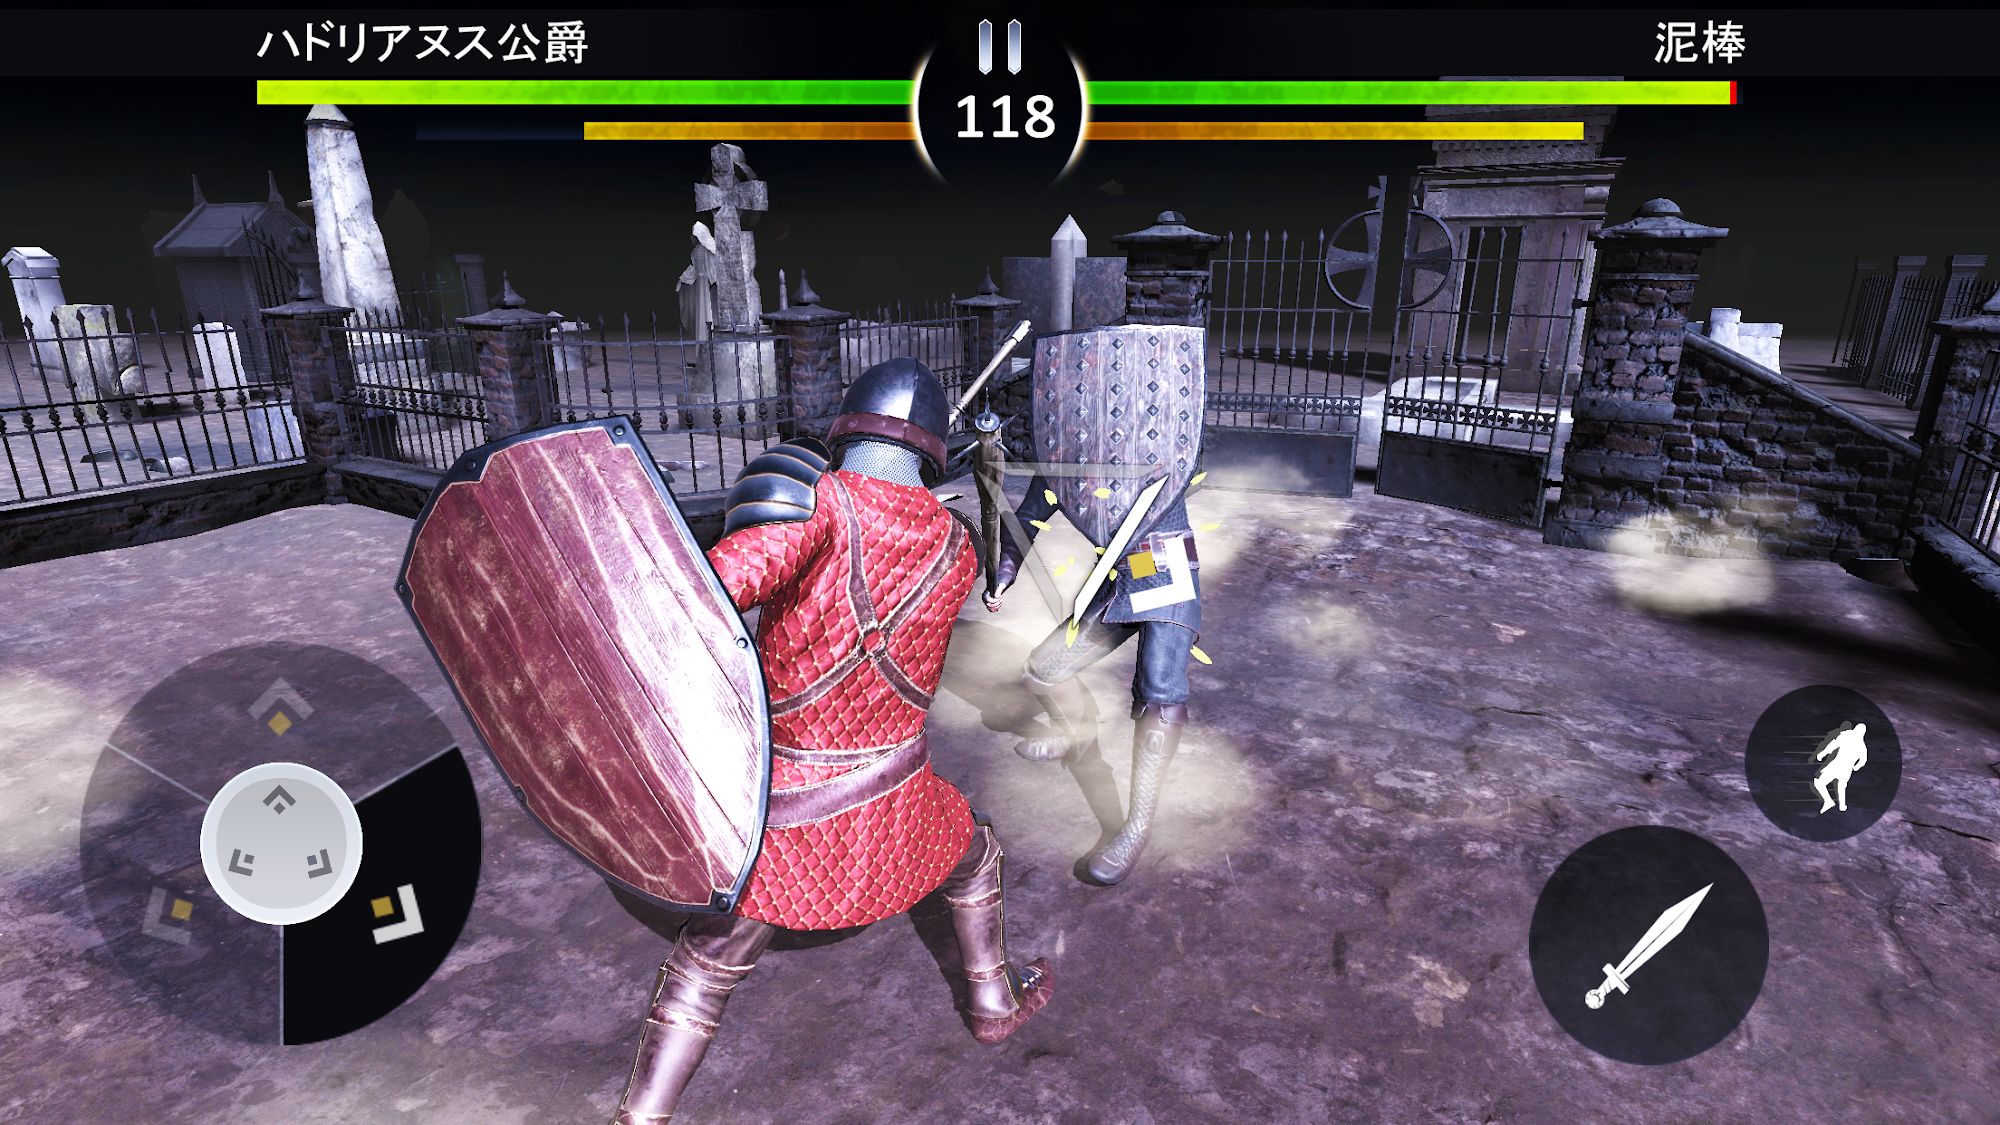 Knights Fight 2: Honor & Glory スクリーンショット1